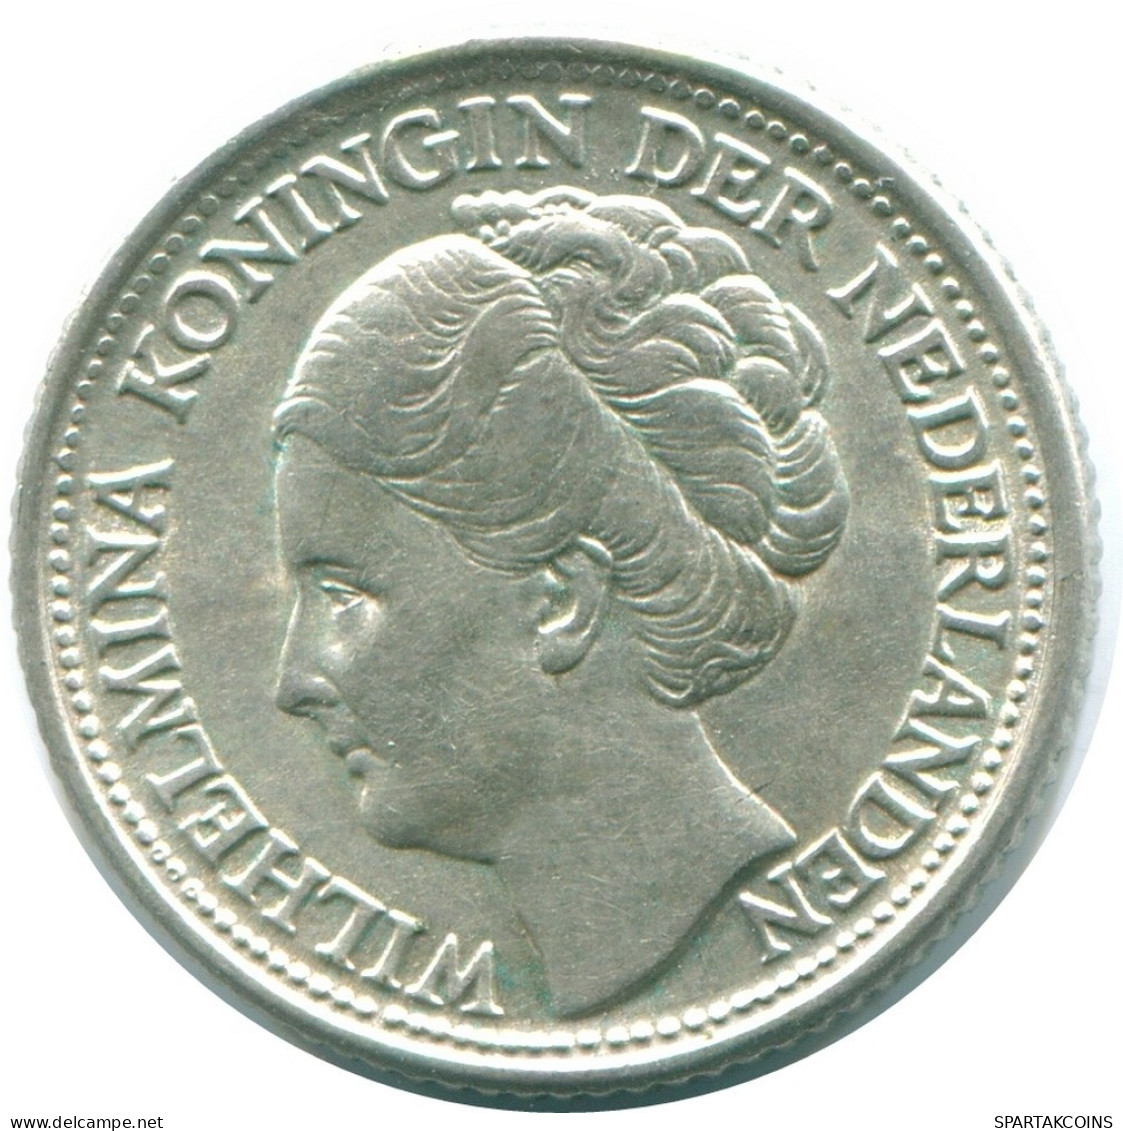 1/4 GULDEN 1944 CURACAO Netherlands SILVER Colonial Coin #NL10561.4.U.A - Curacao